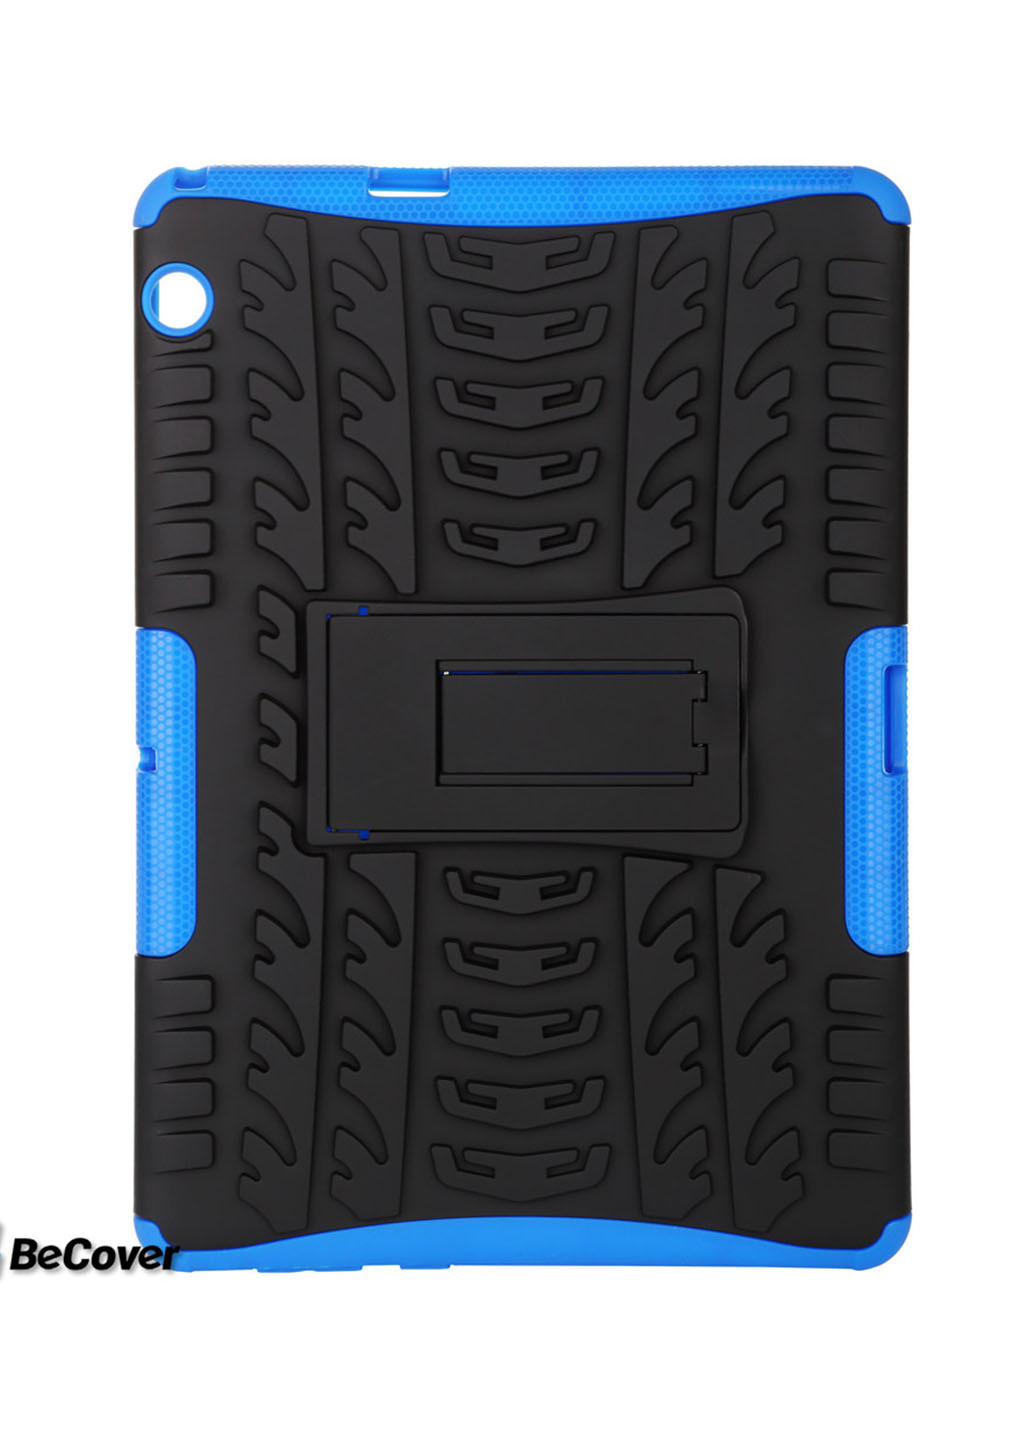 Противоударный чехол-подставка для Huawei MediaPad T3 10 Blue (702217) BeCover противоударный подставка для huawei mediapad t3 10 blue (702217) (151229103)